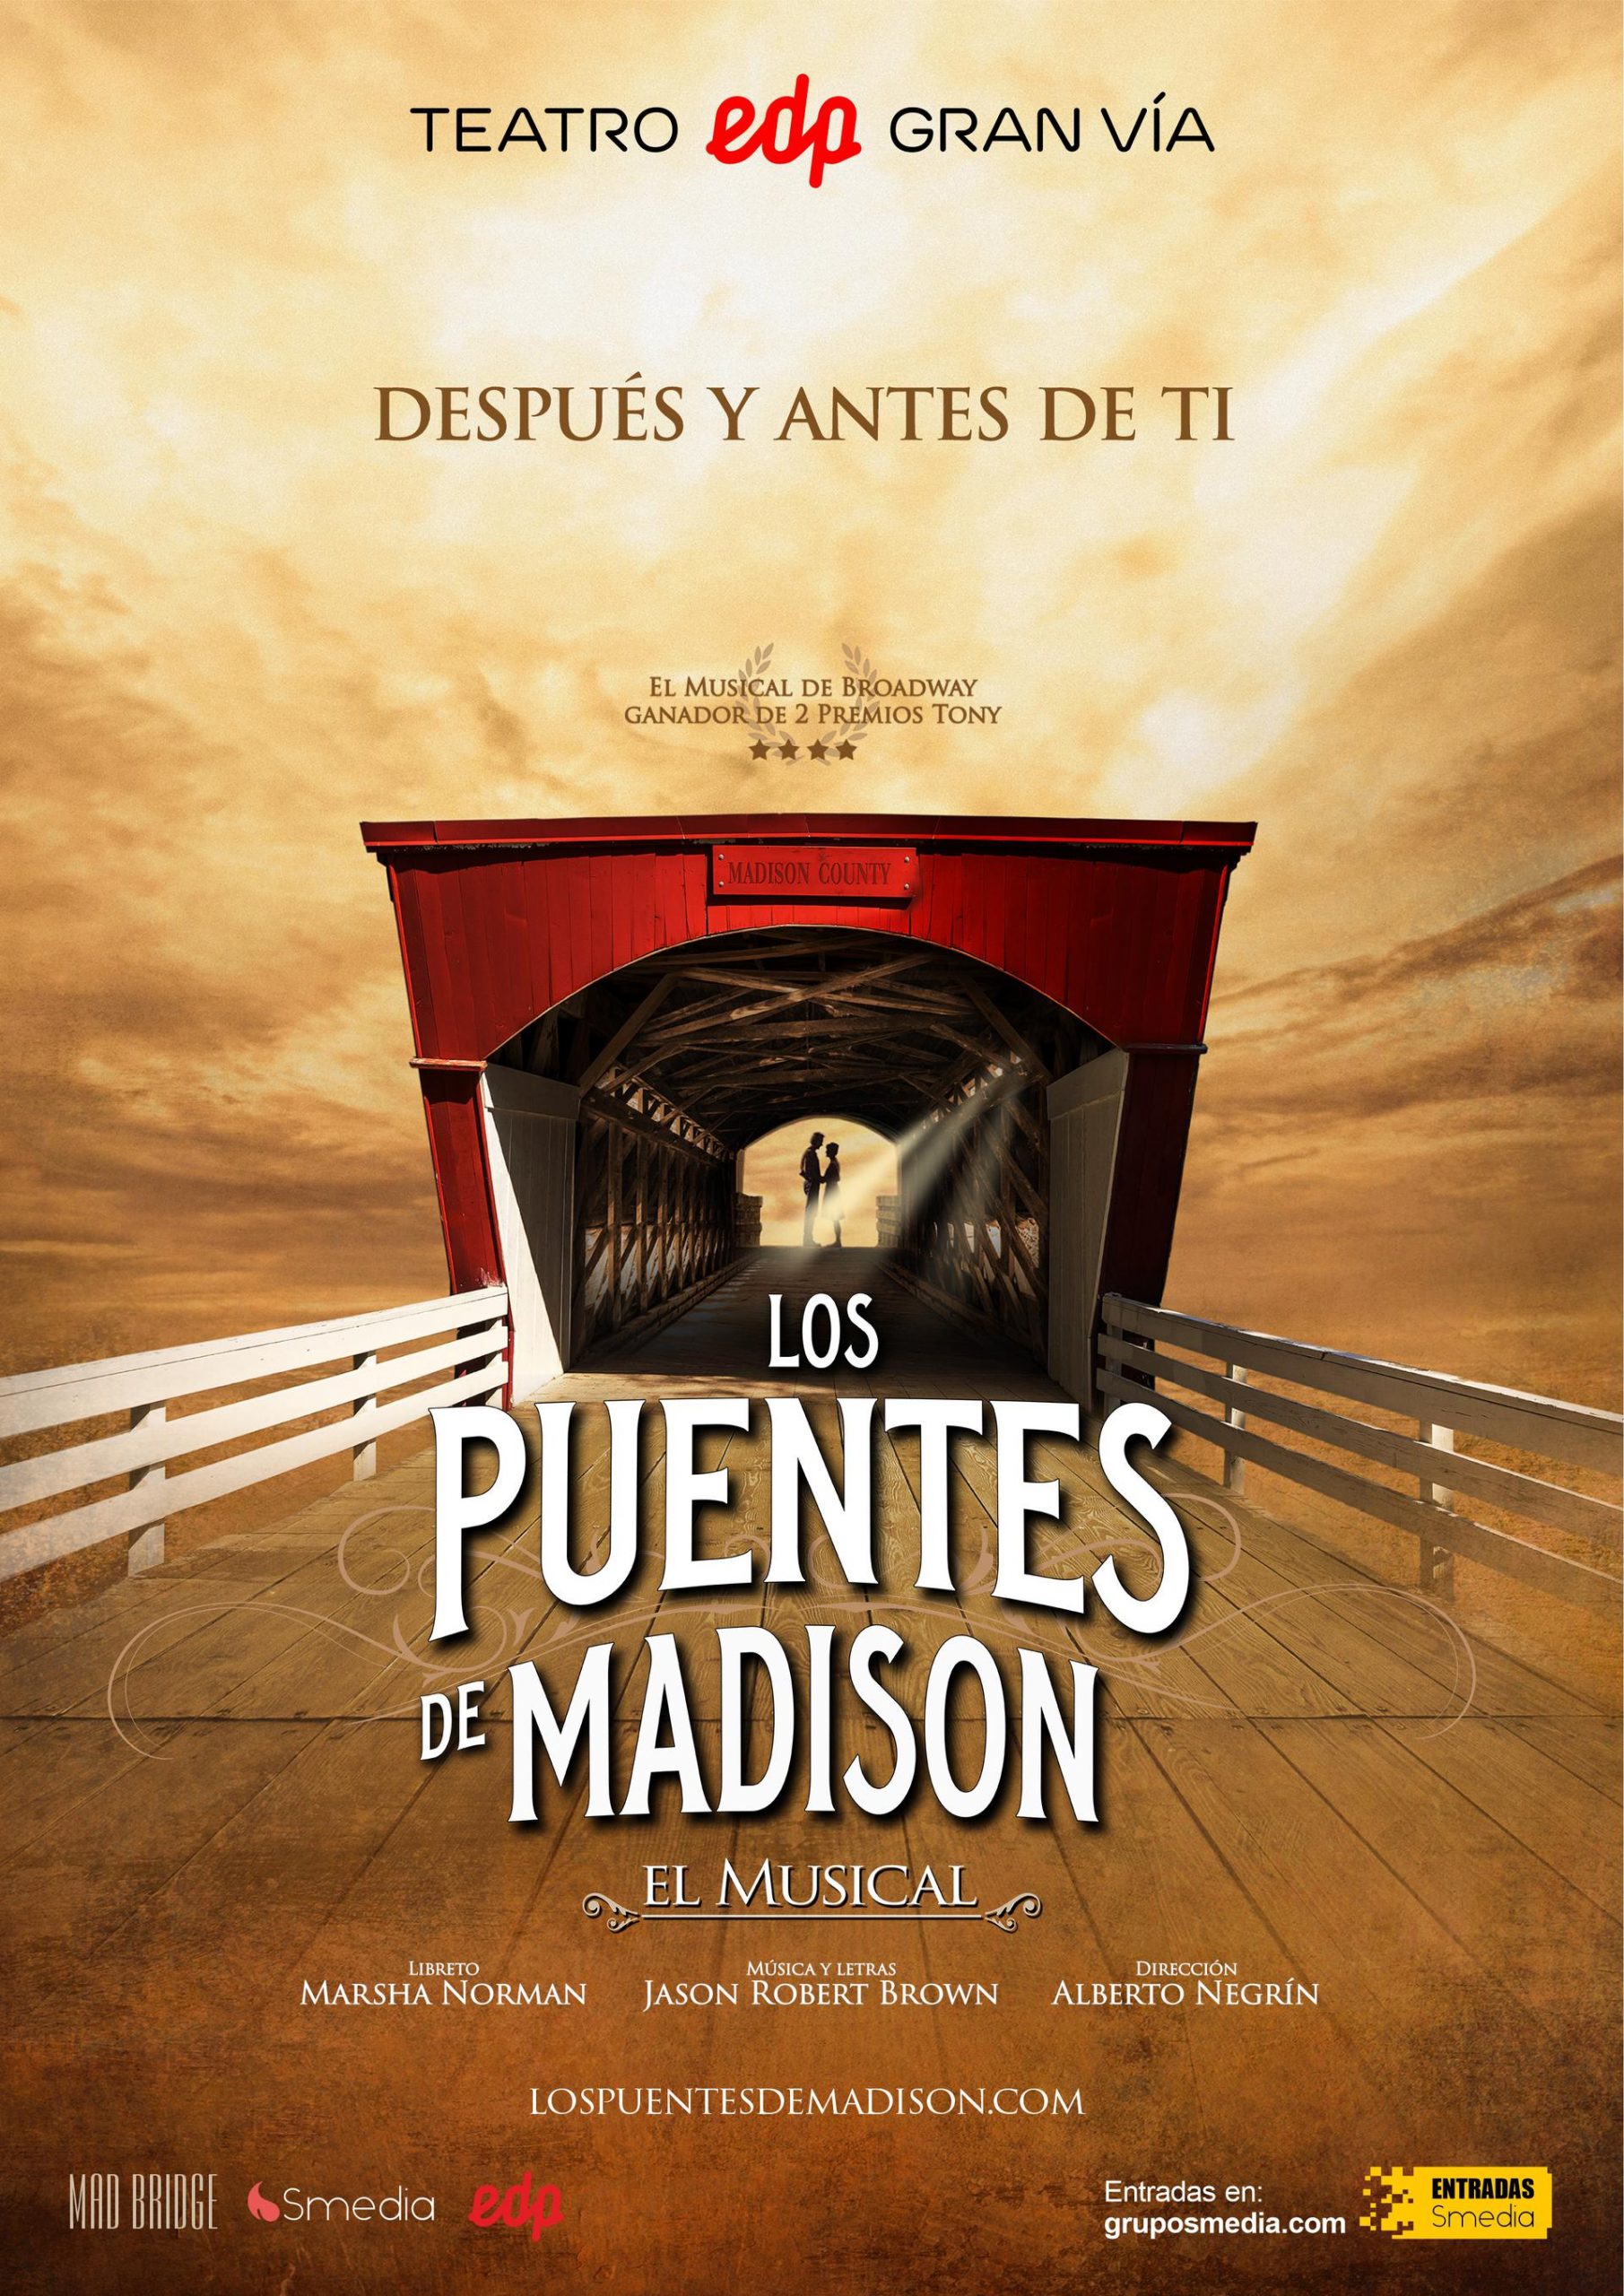 El musical de 'Los puentes de Madison' llega a Madrid - MERCADEO POP